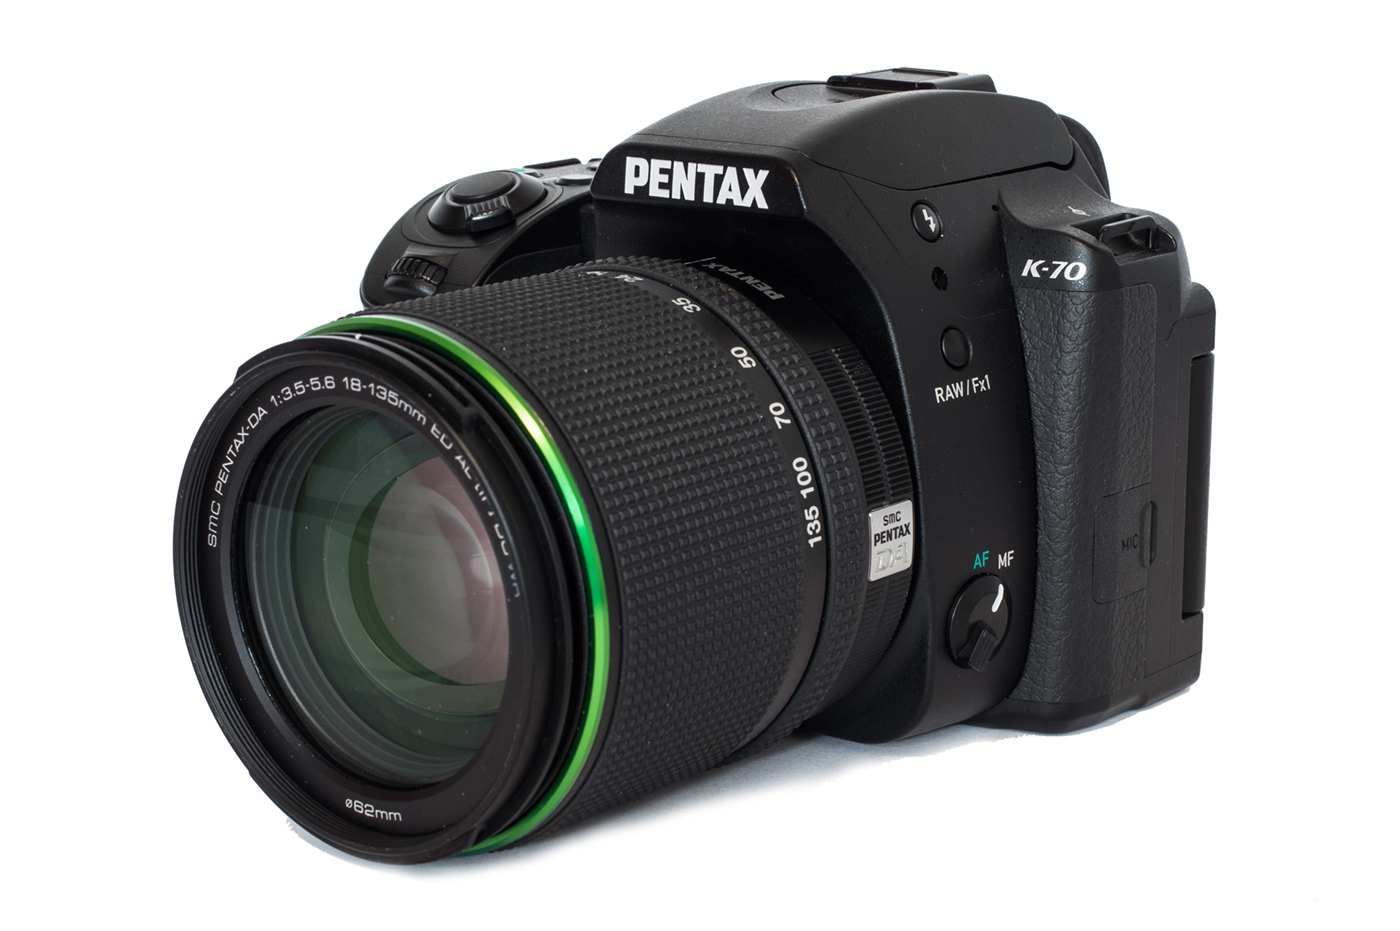 The Pentax K-70 with DA 18-135mm WR kit lens